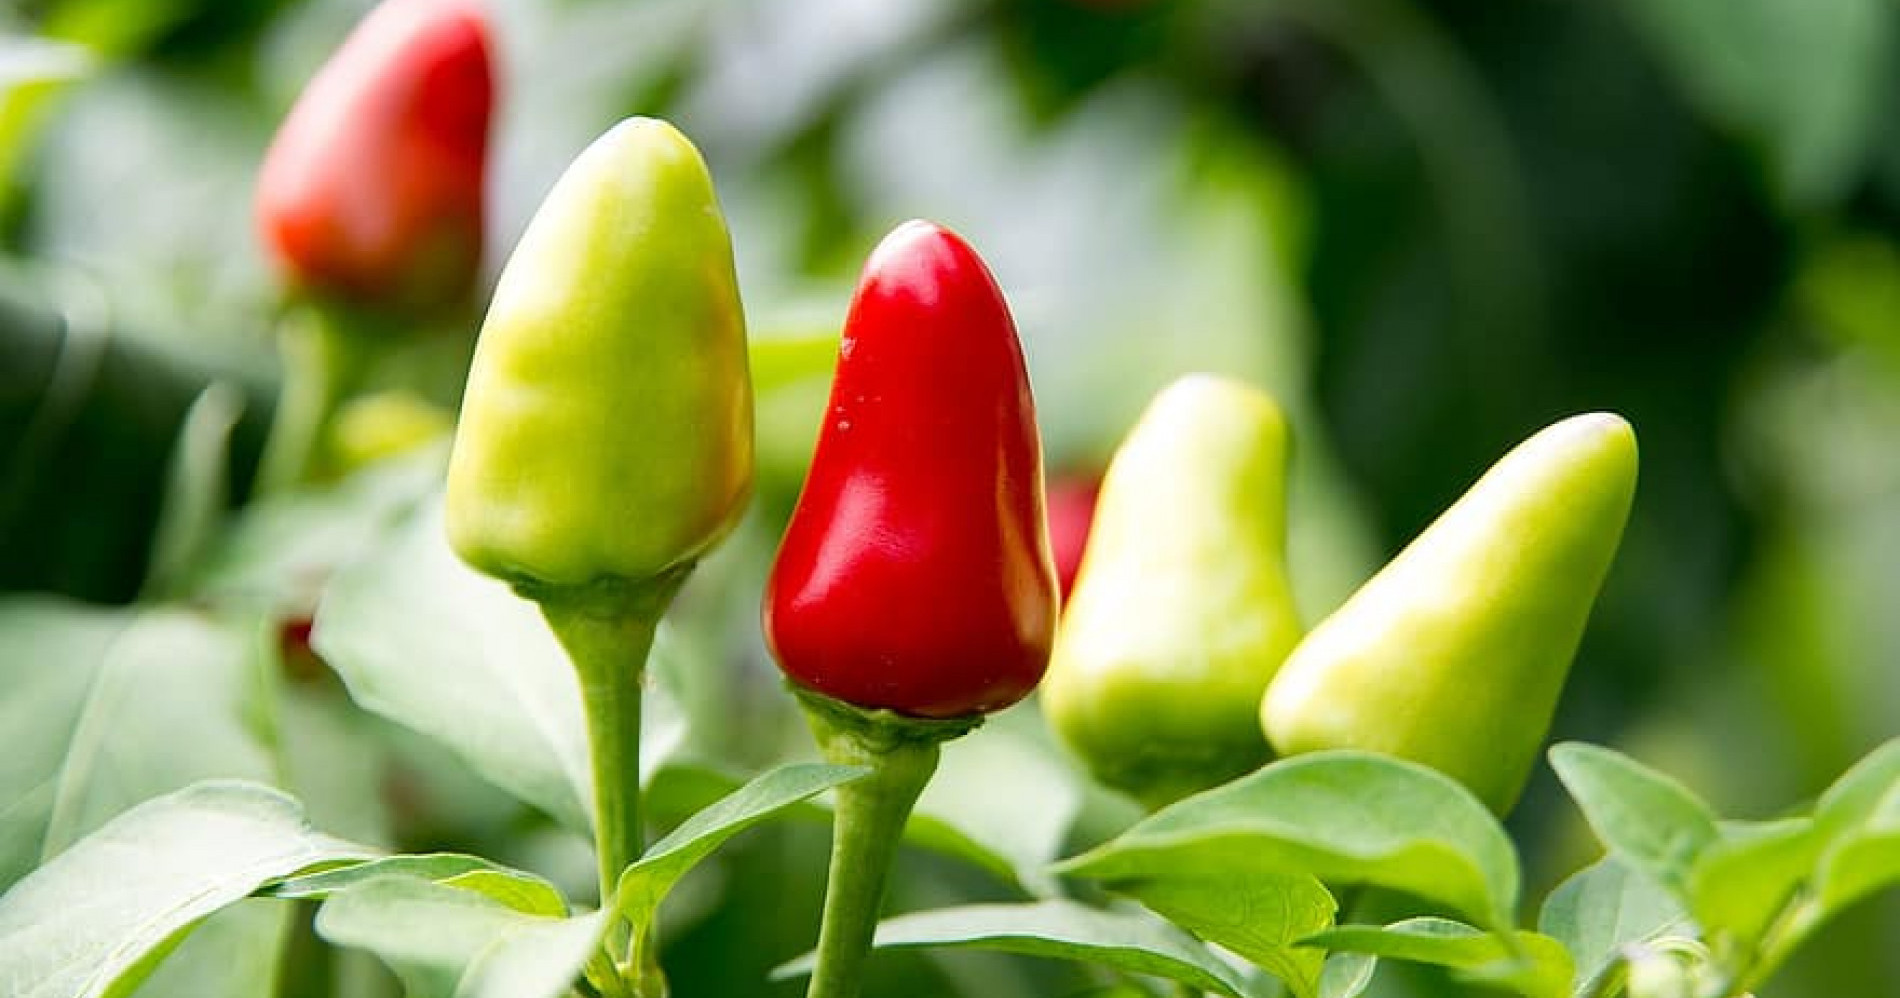 Menanam tumbuhan memberi manfaat ekonomi dan keseimbangan hidup. (Sumber gambar: https://p0.pikist.com/photos/220/476/chili-peppers-cooking-food-spices-spicy-ingredient-red-kitchen.jpg)